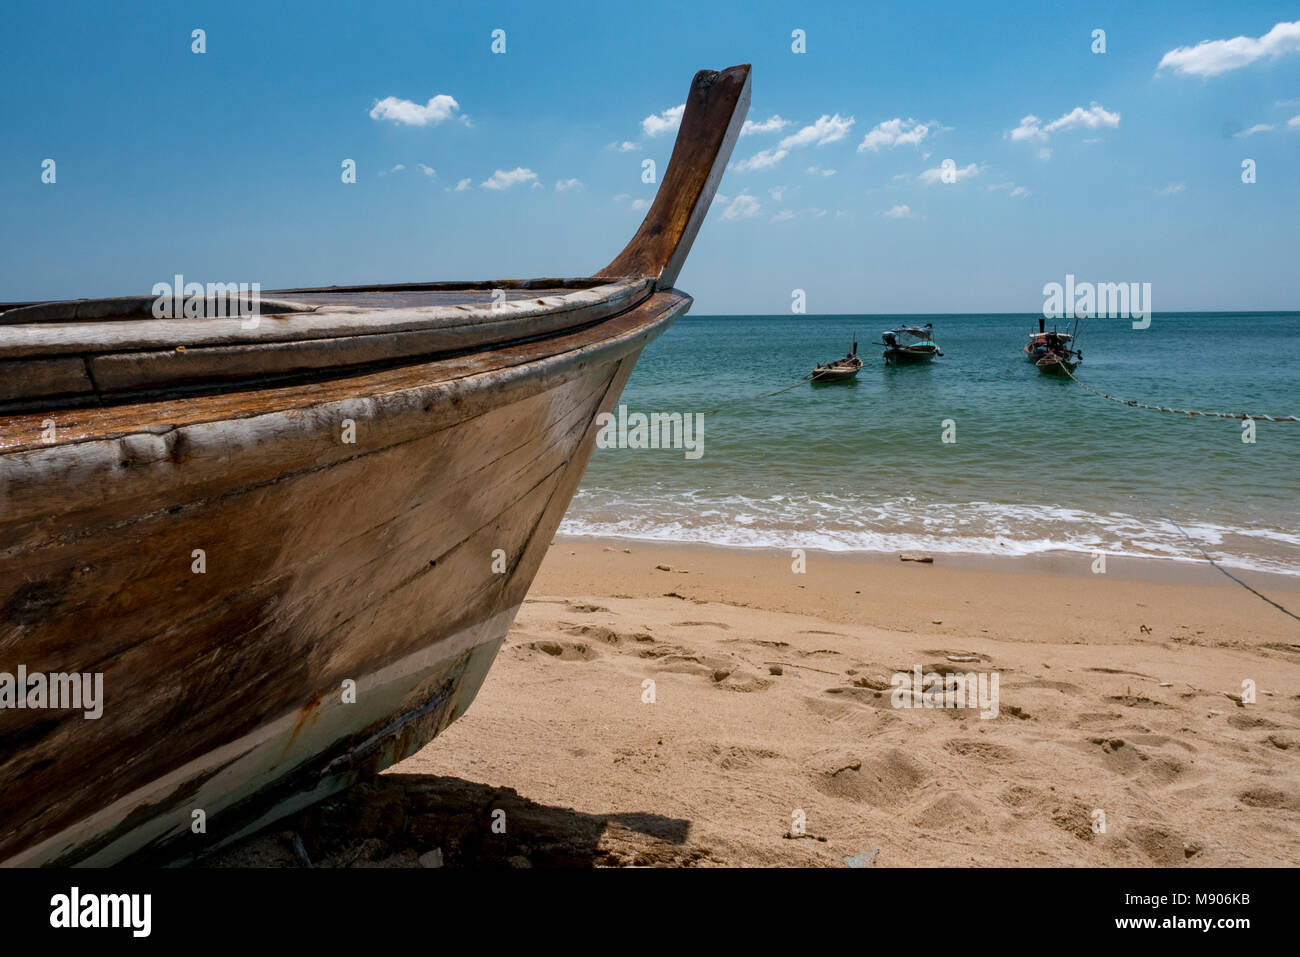 moored fishing boats, ko lanta island - thailand Stock Photo